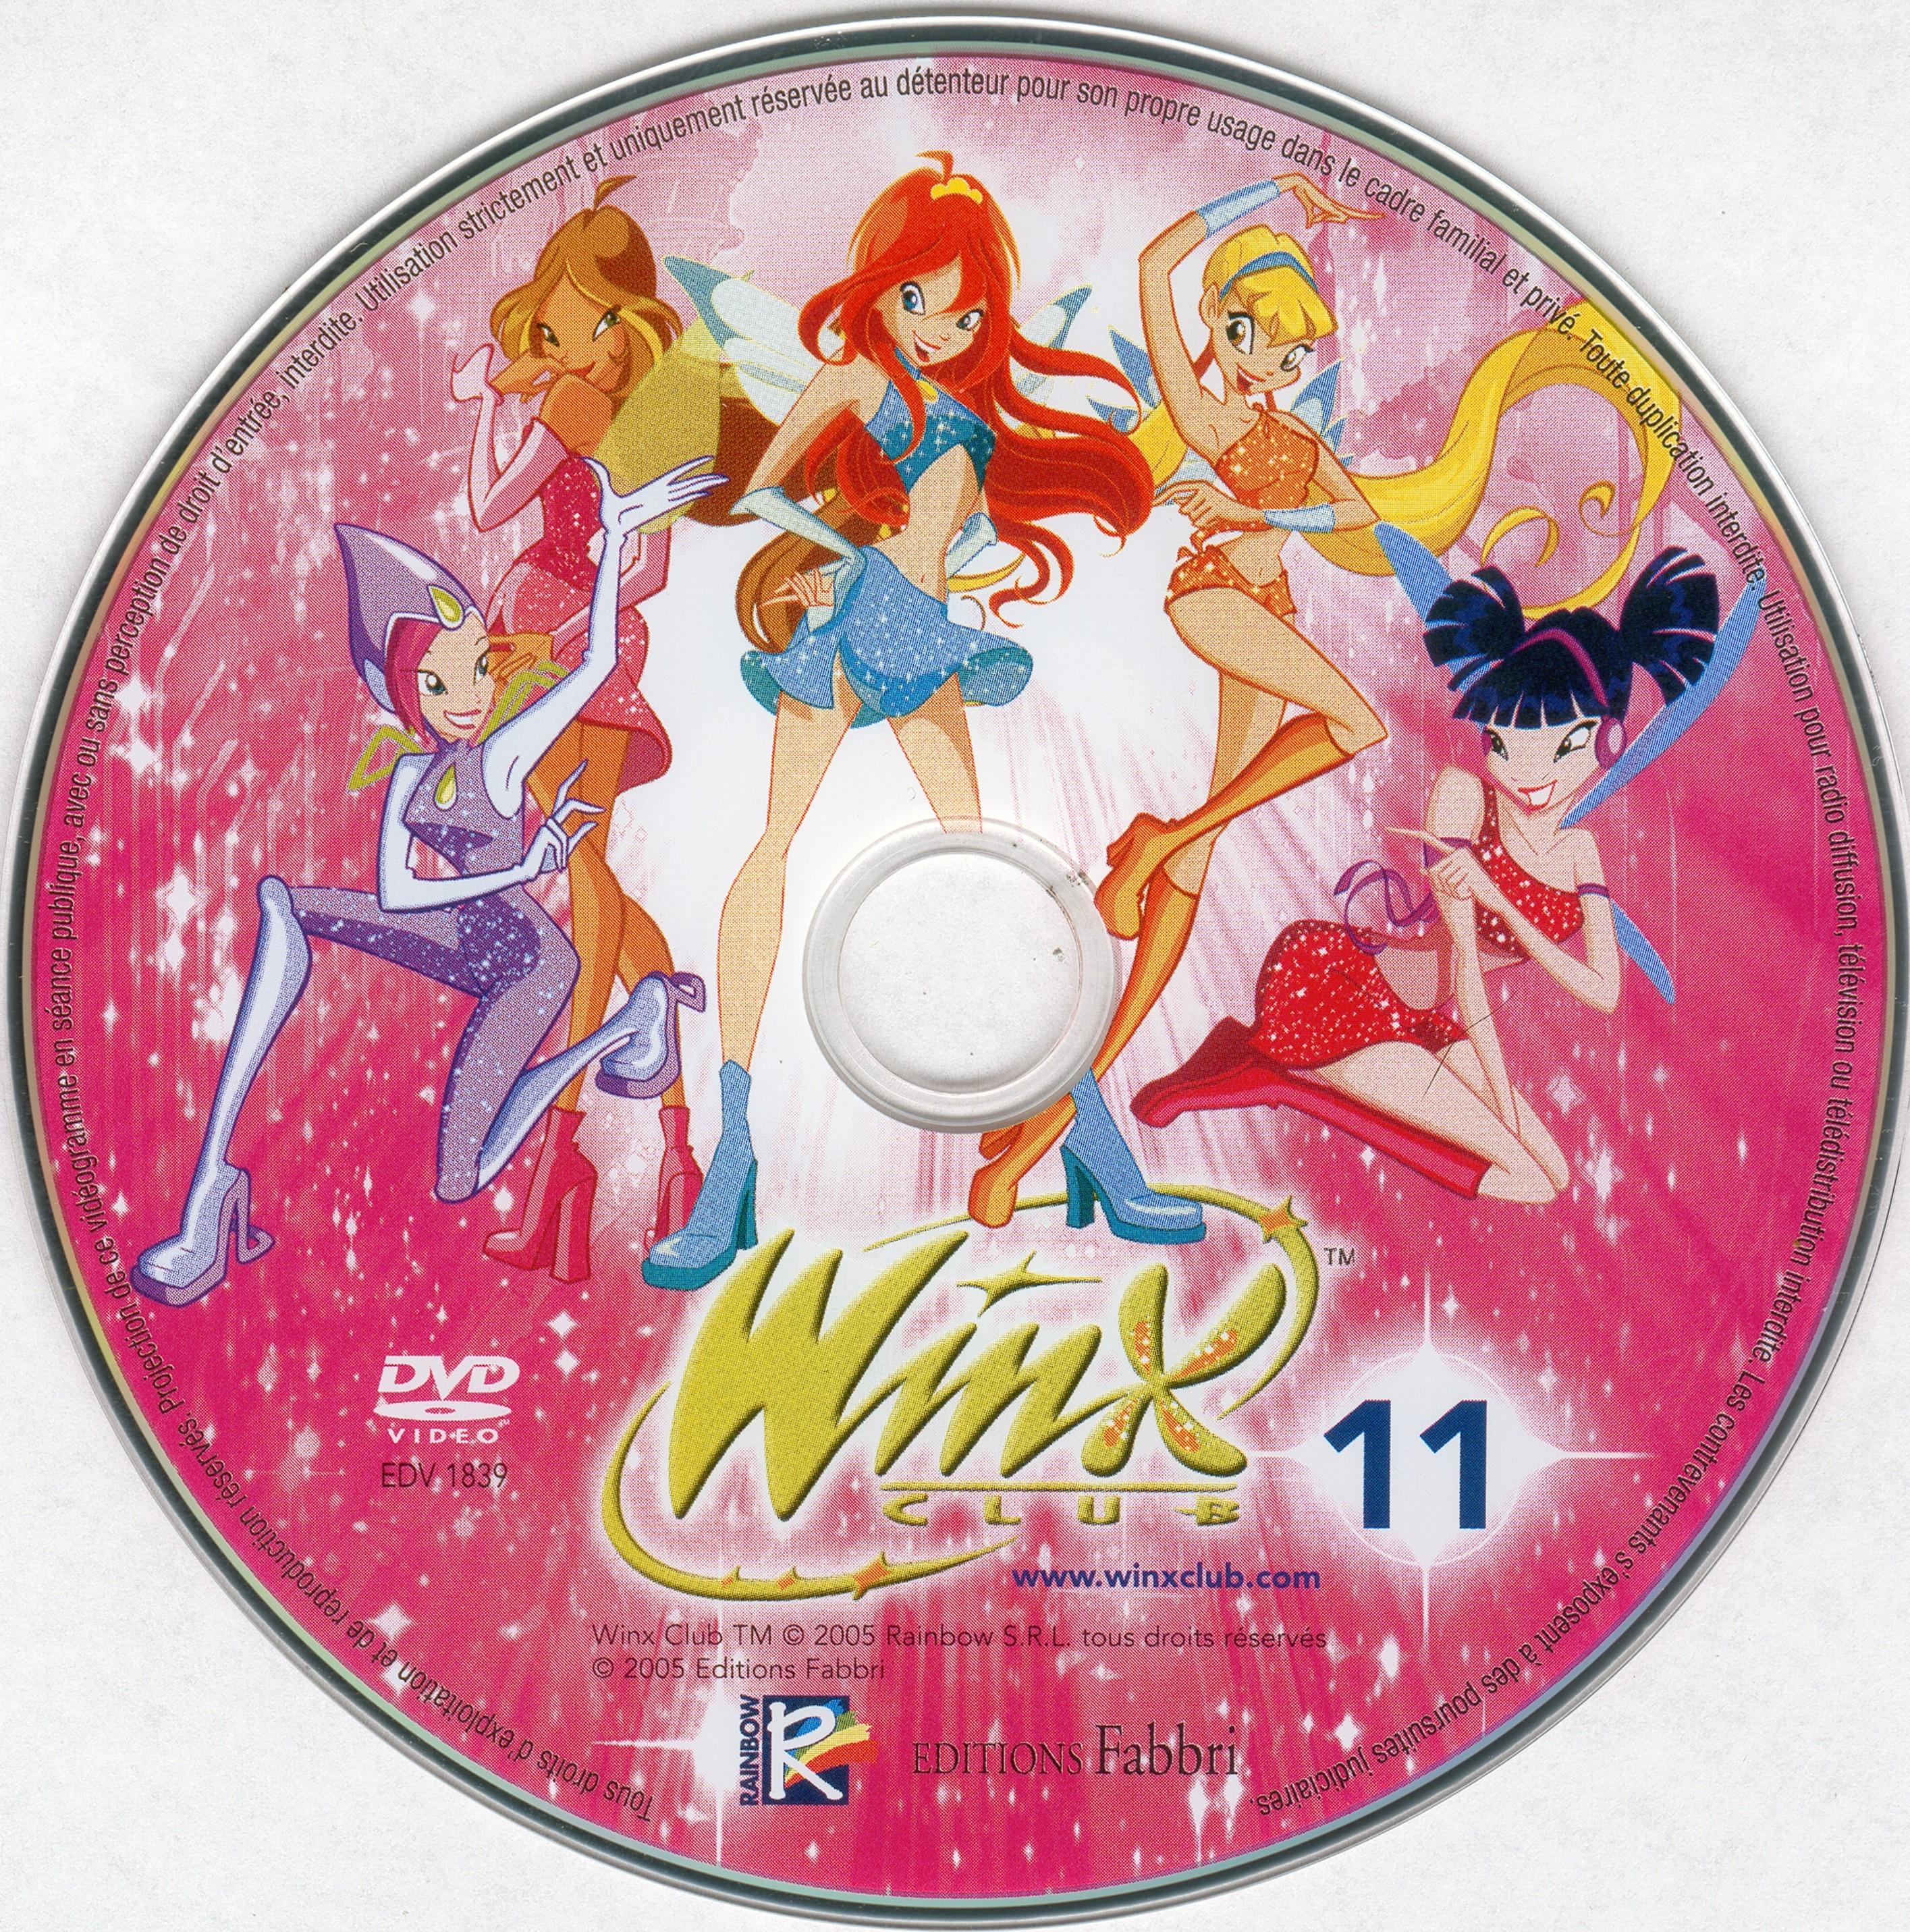 Winx Club vol 11